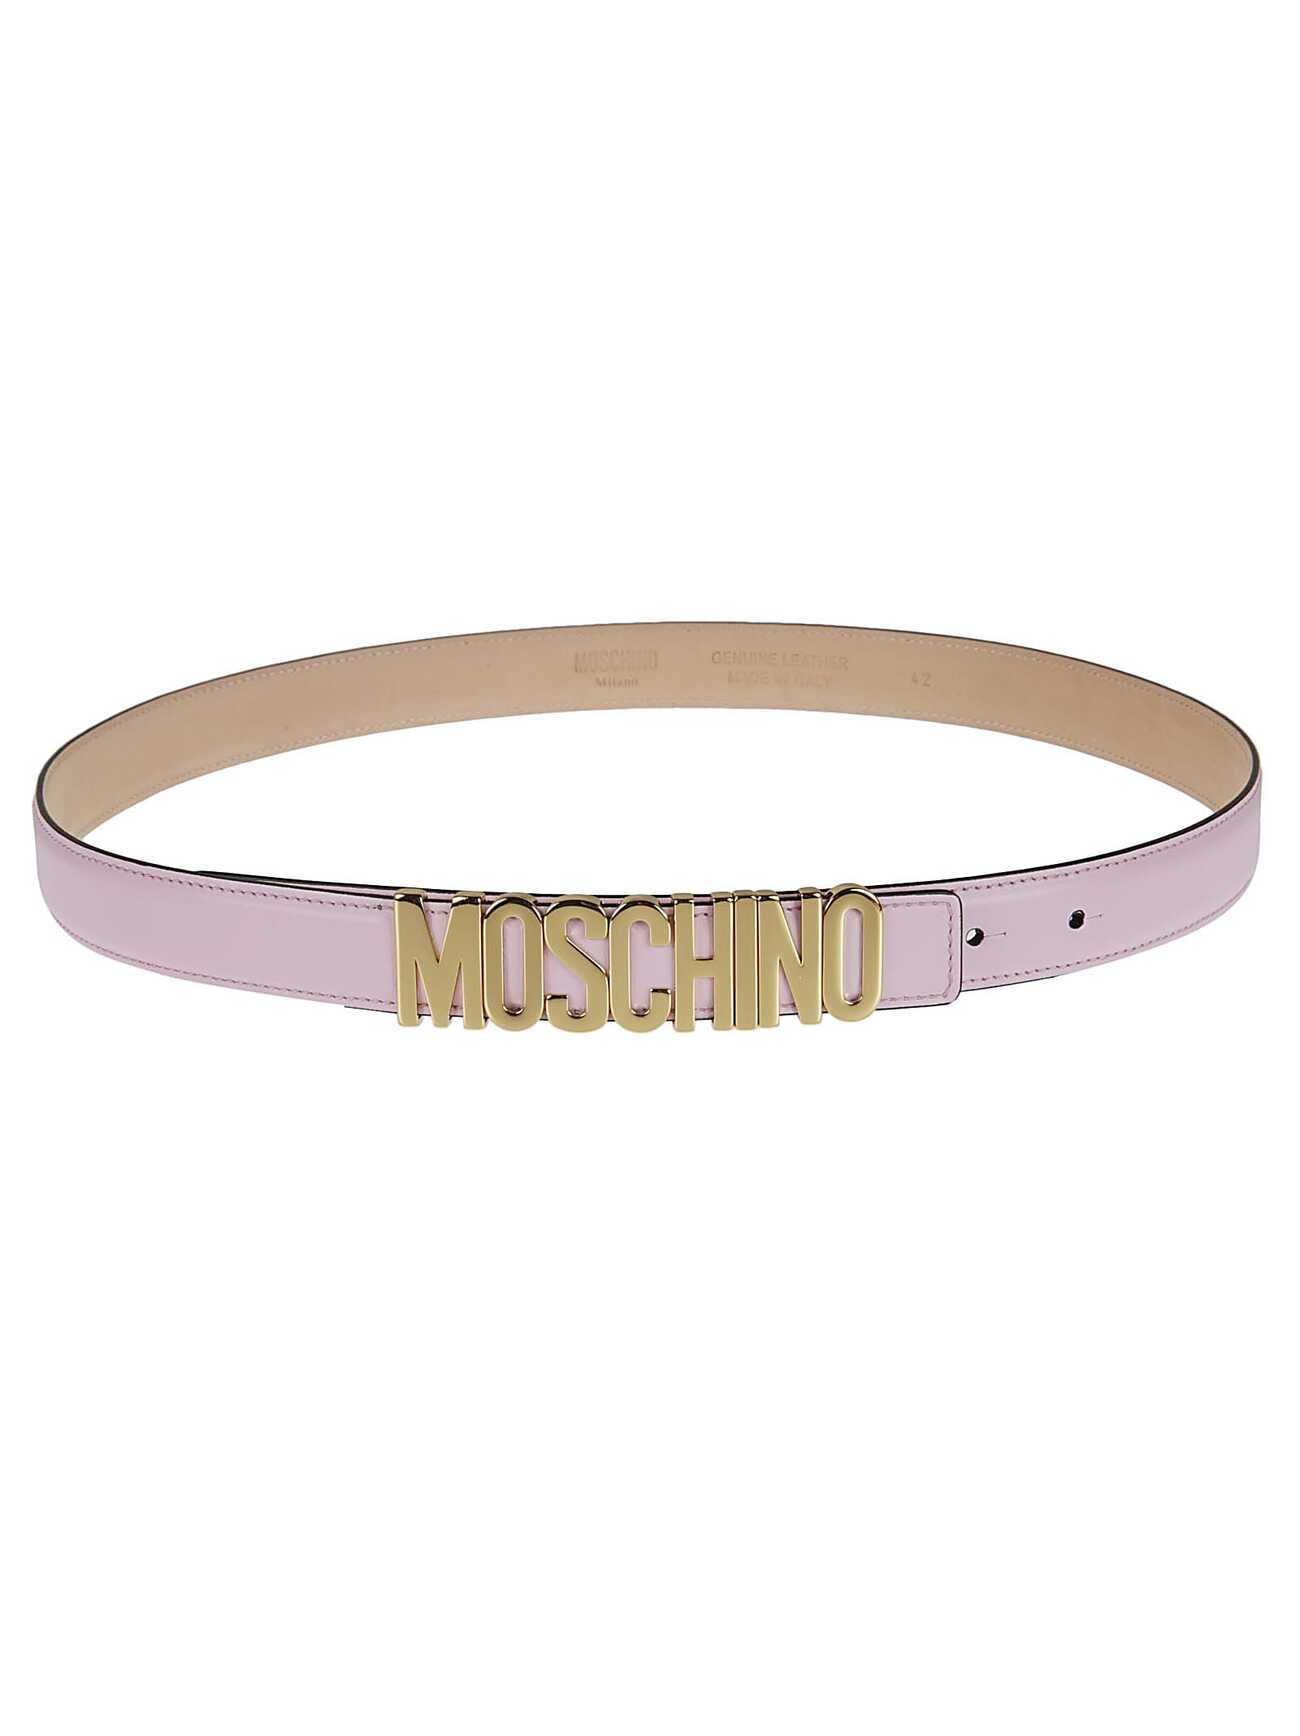 Moschino Logo Buckled Belt in pink